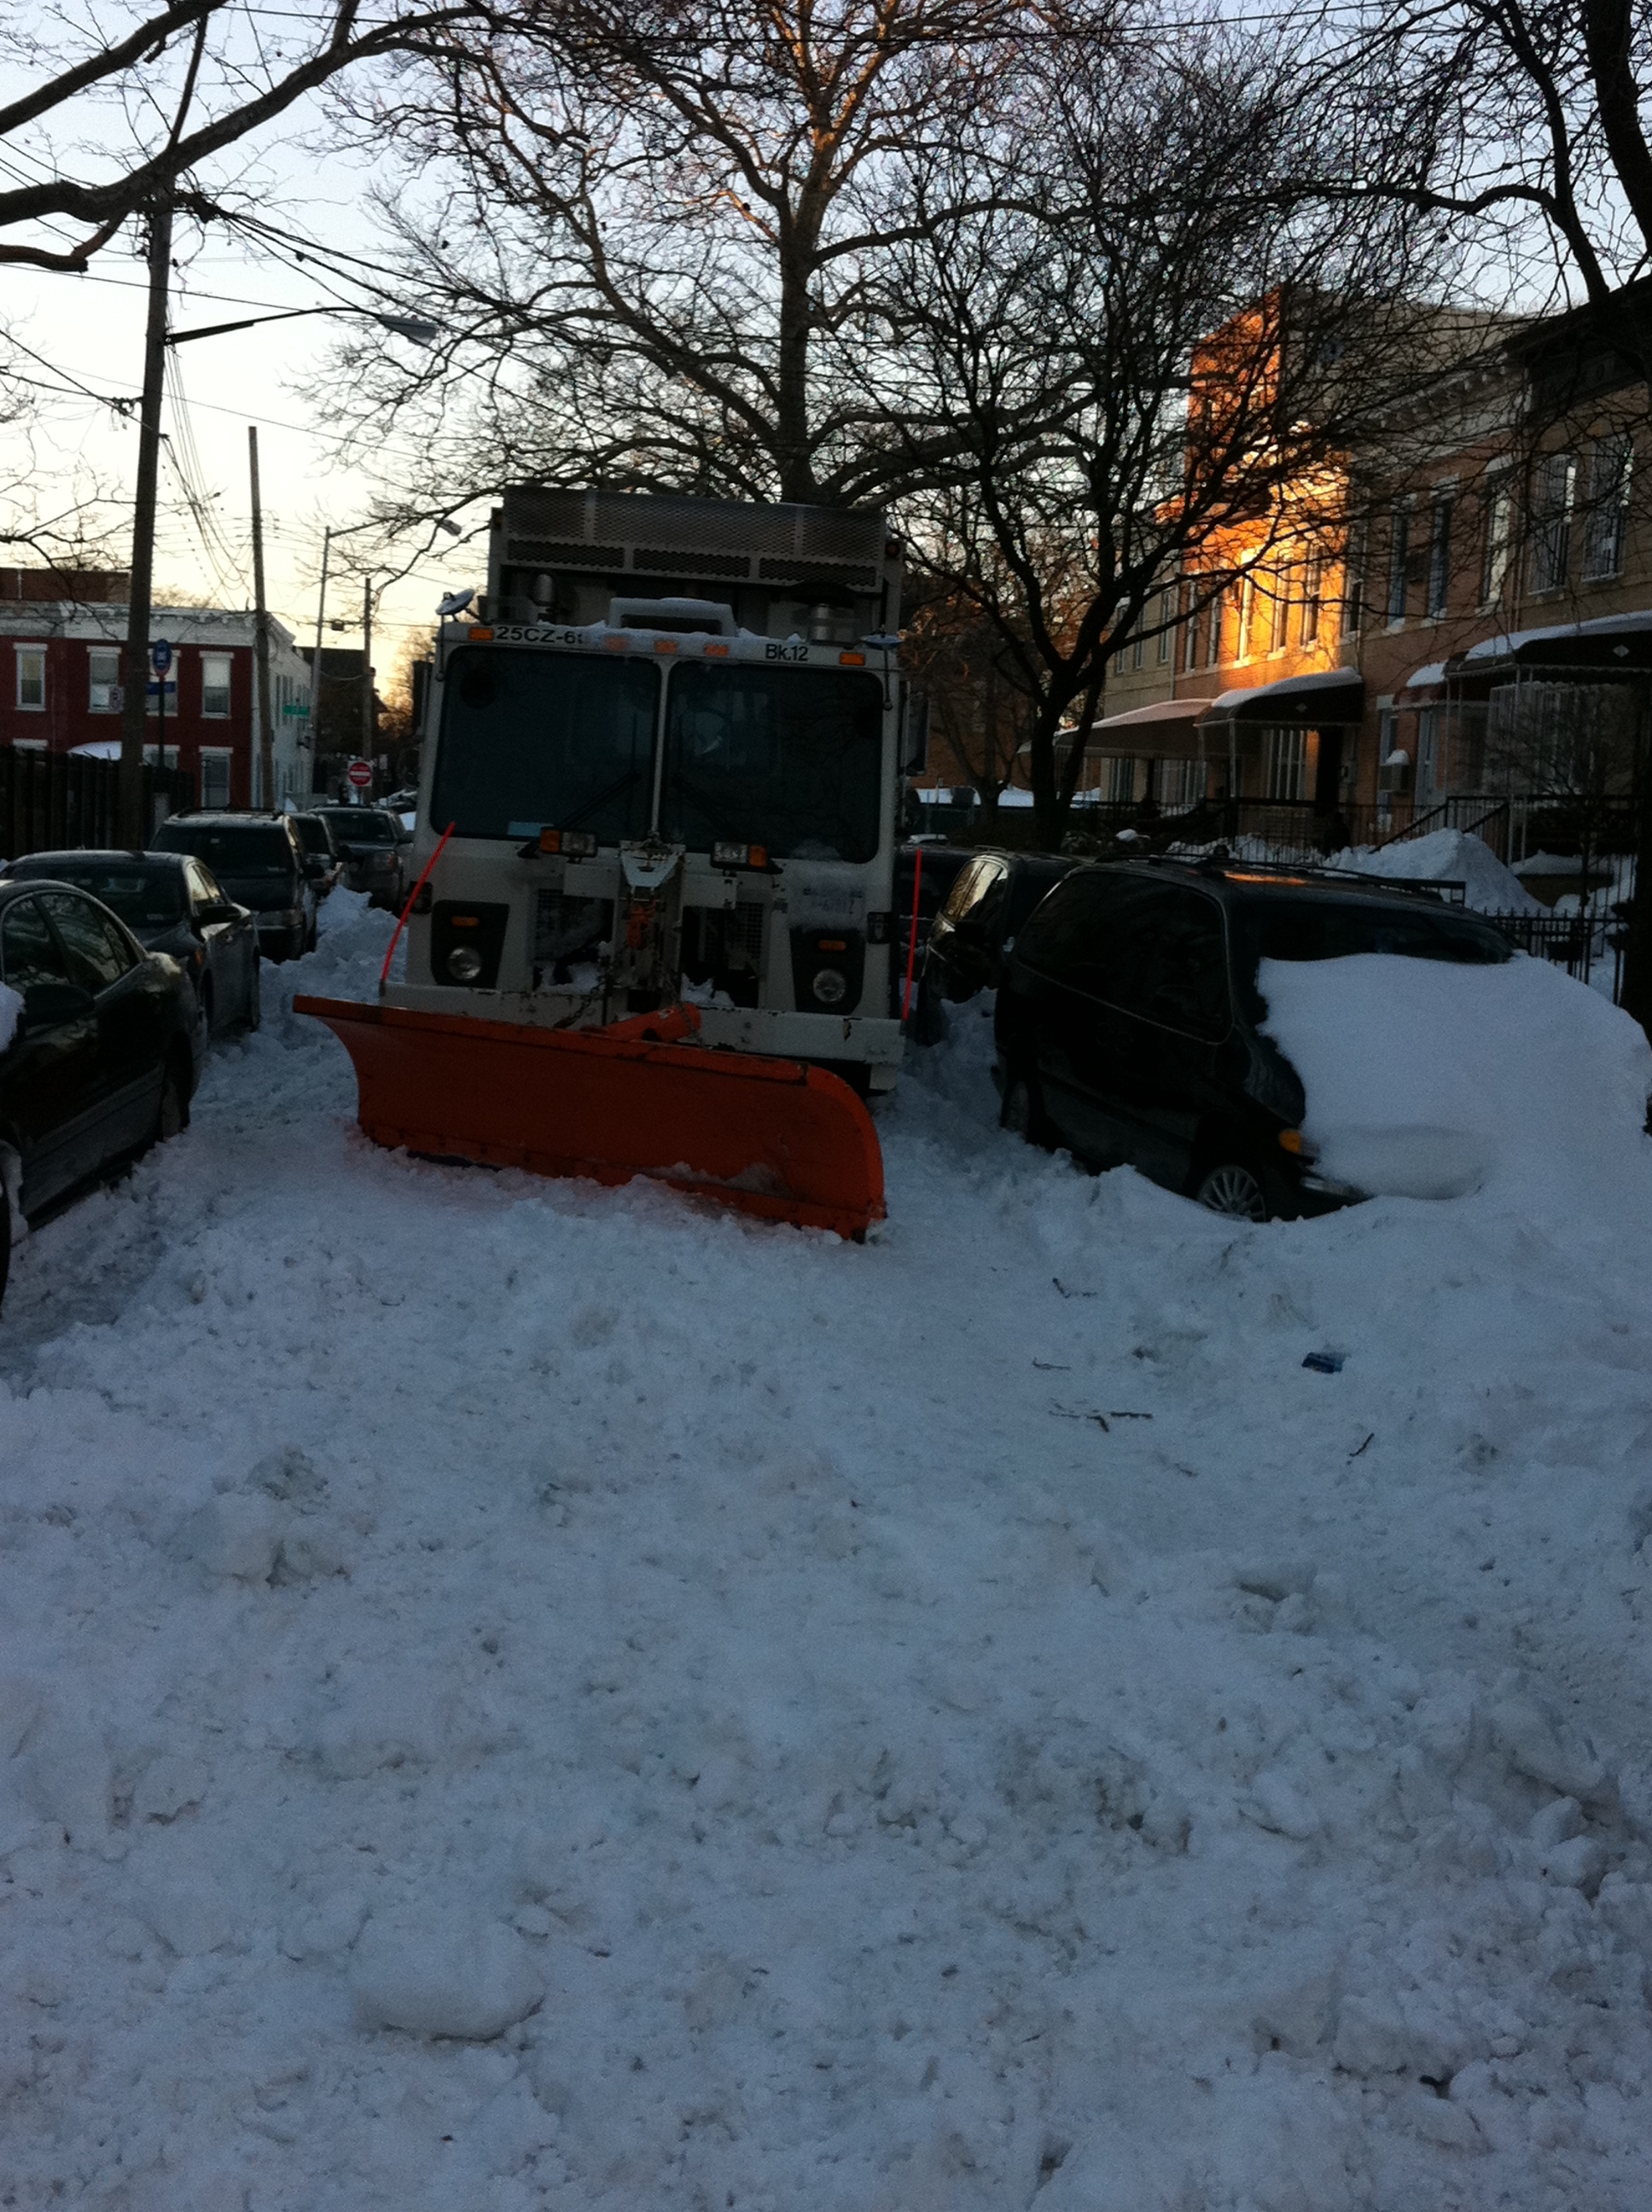 snow-plow-stuck-in-brooklyn.jpg 